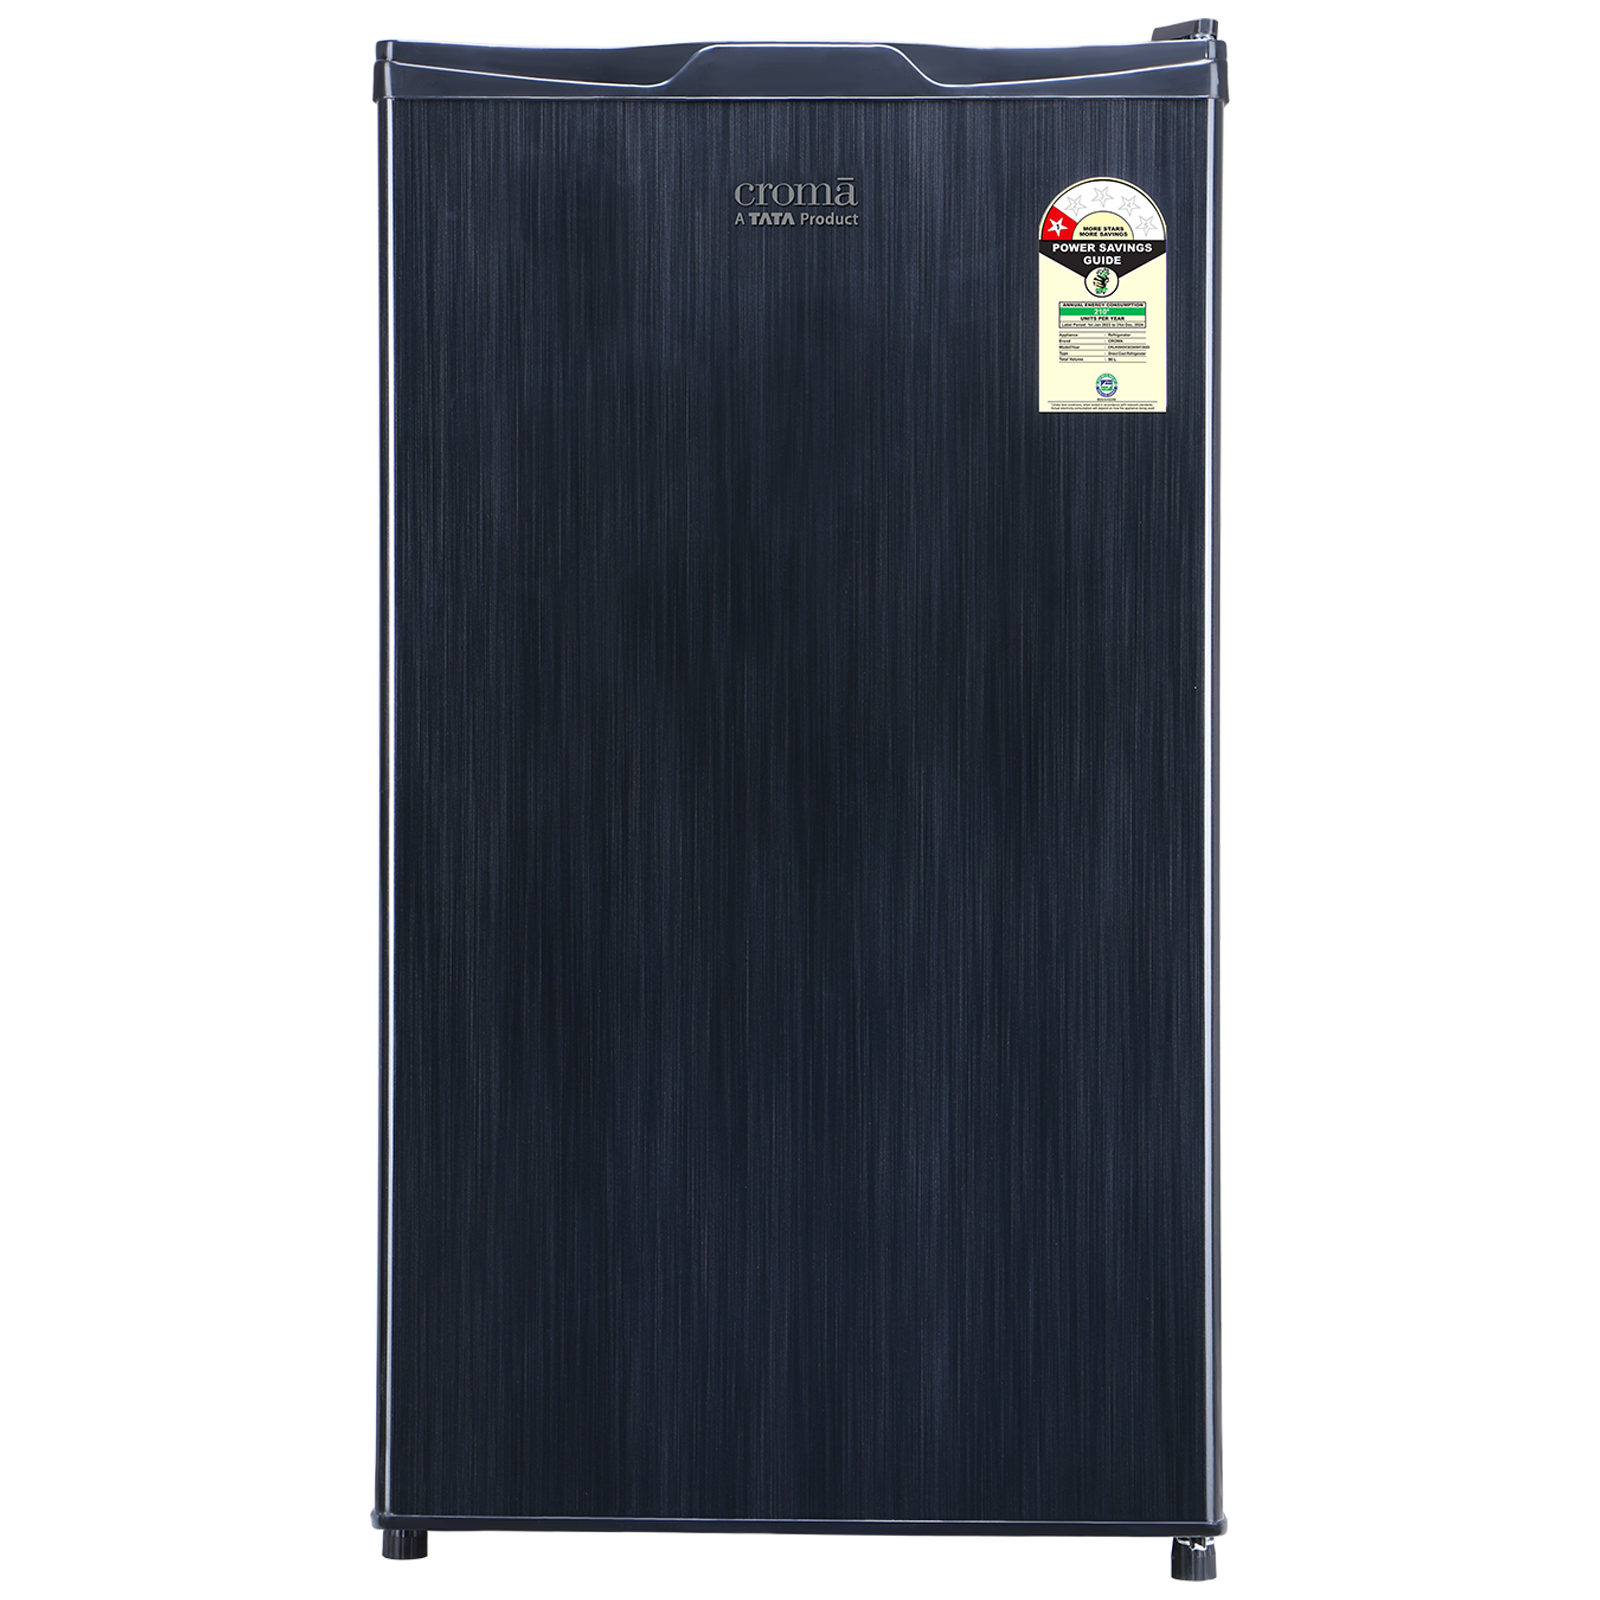 

Croma 90 Litres 1 Star Direct Cool Single Door Refrigerator with Anti Fungal Door Gasket (CRLR090DCB250507, Hairline Grey)